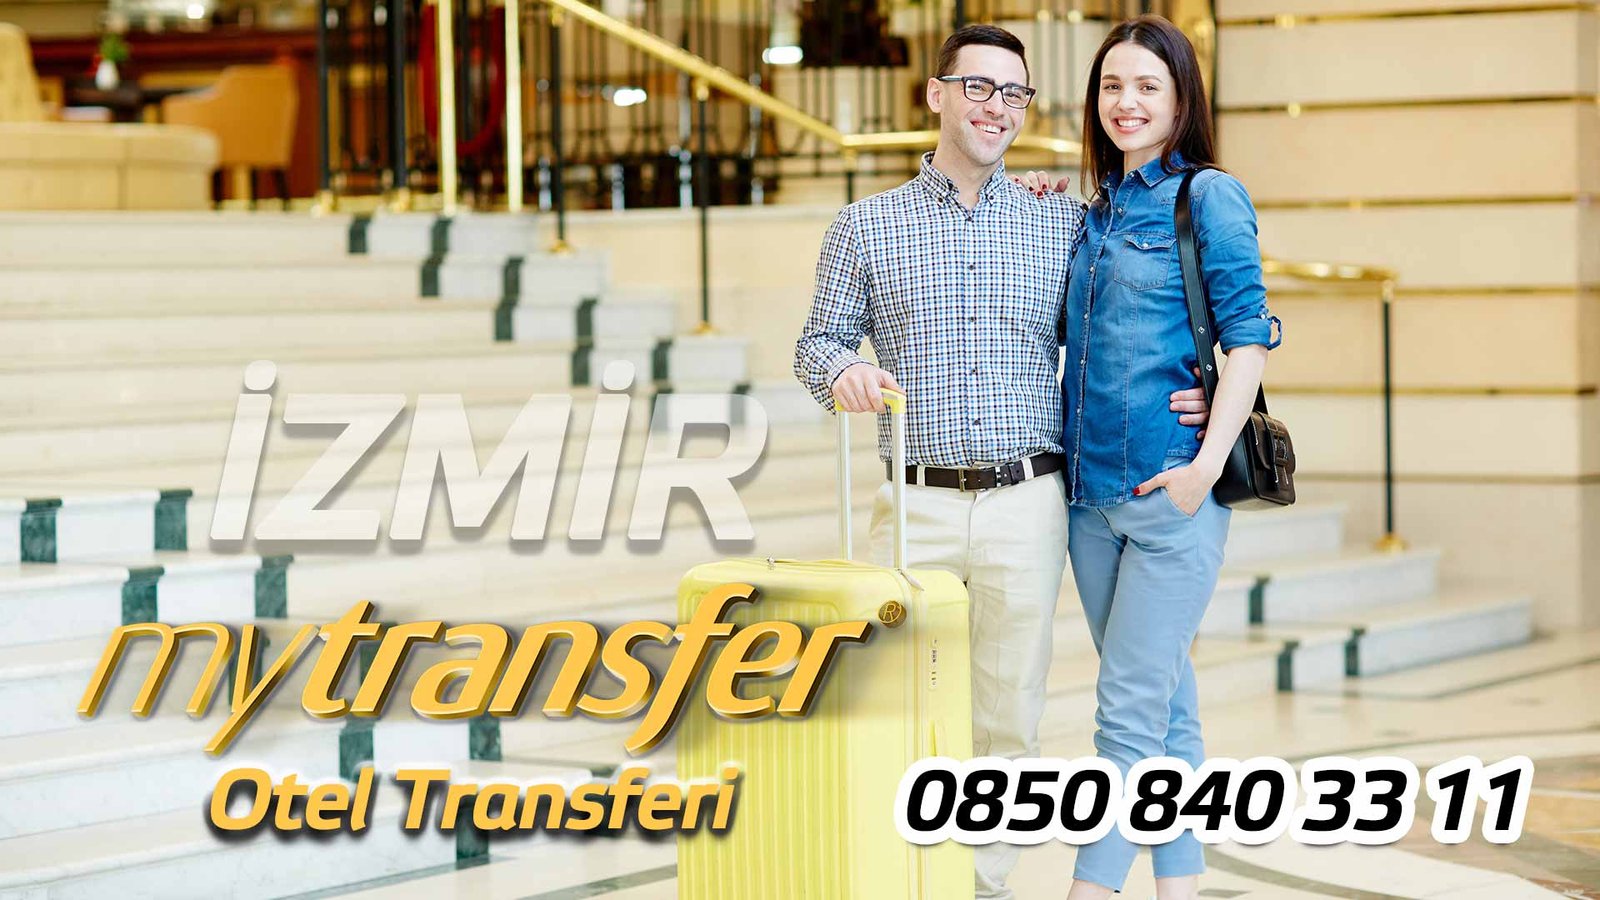 İzmir Otel Transferi